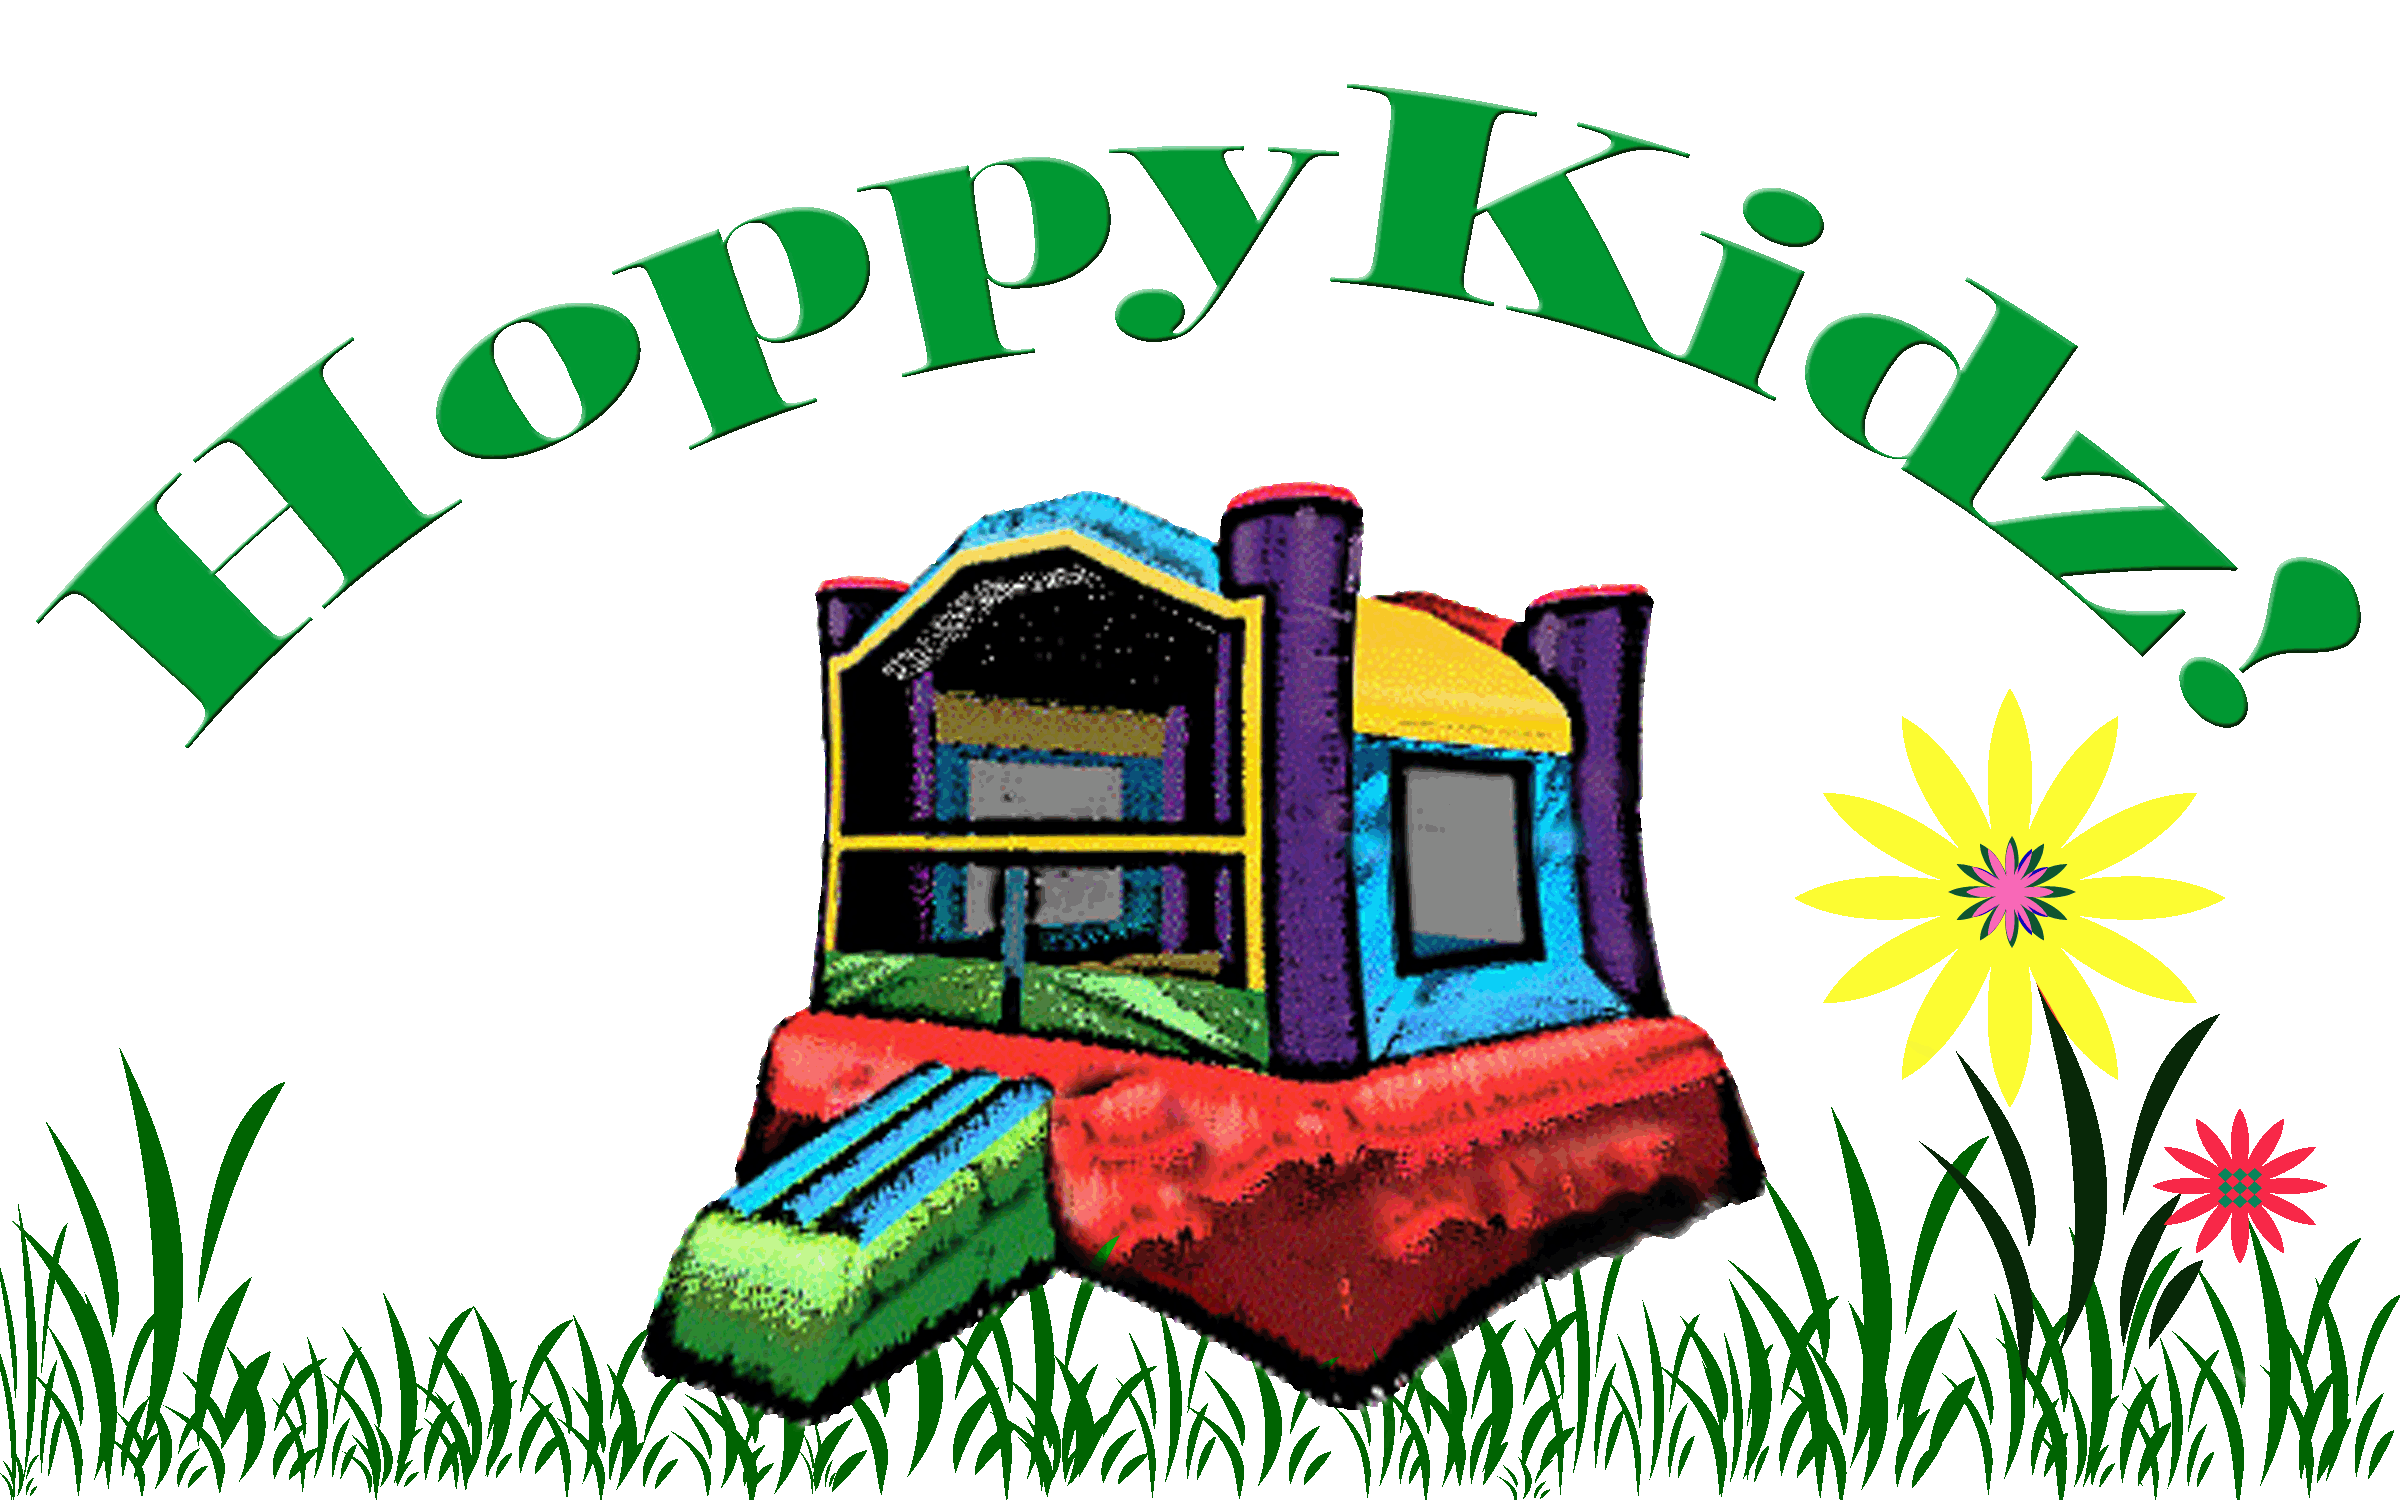 HoppyKidz! Omaha Inflatable Rentals logo